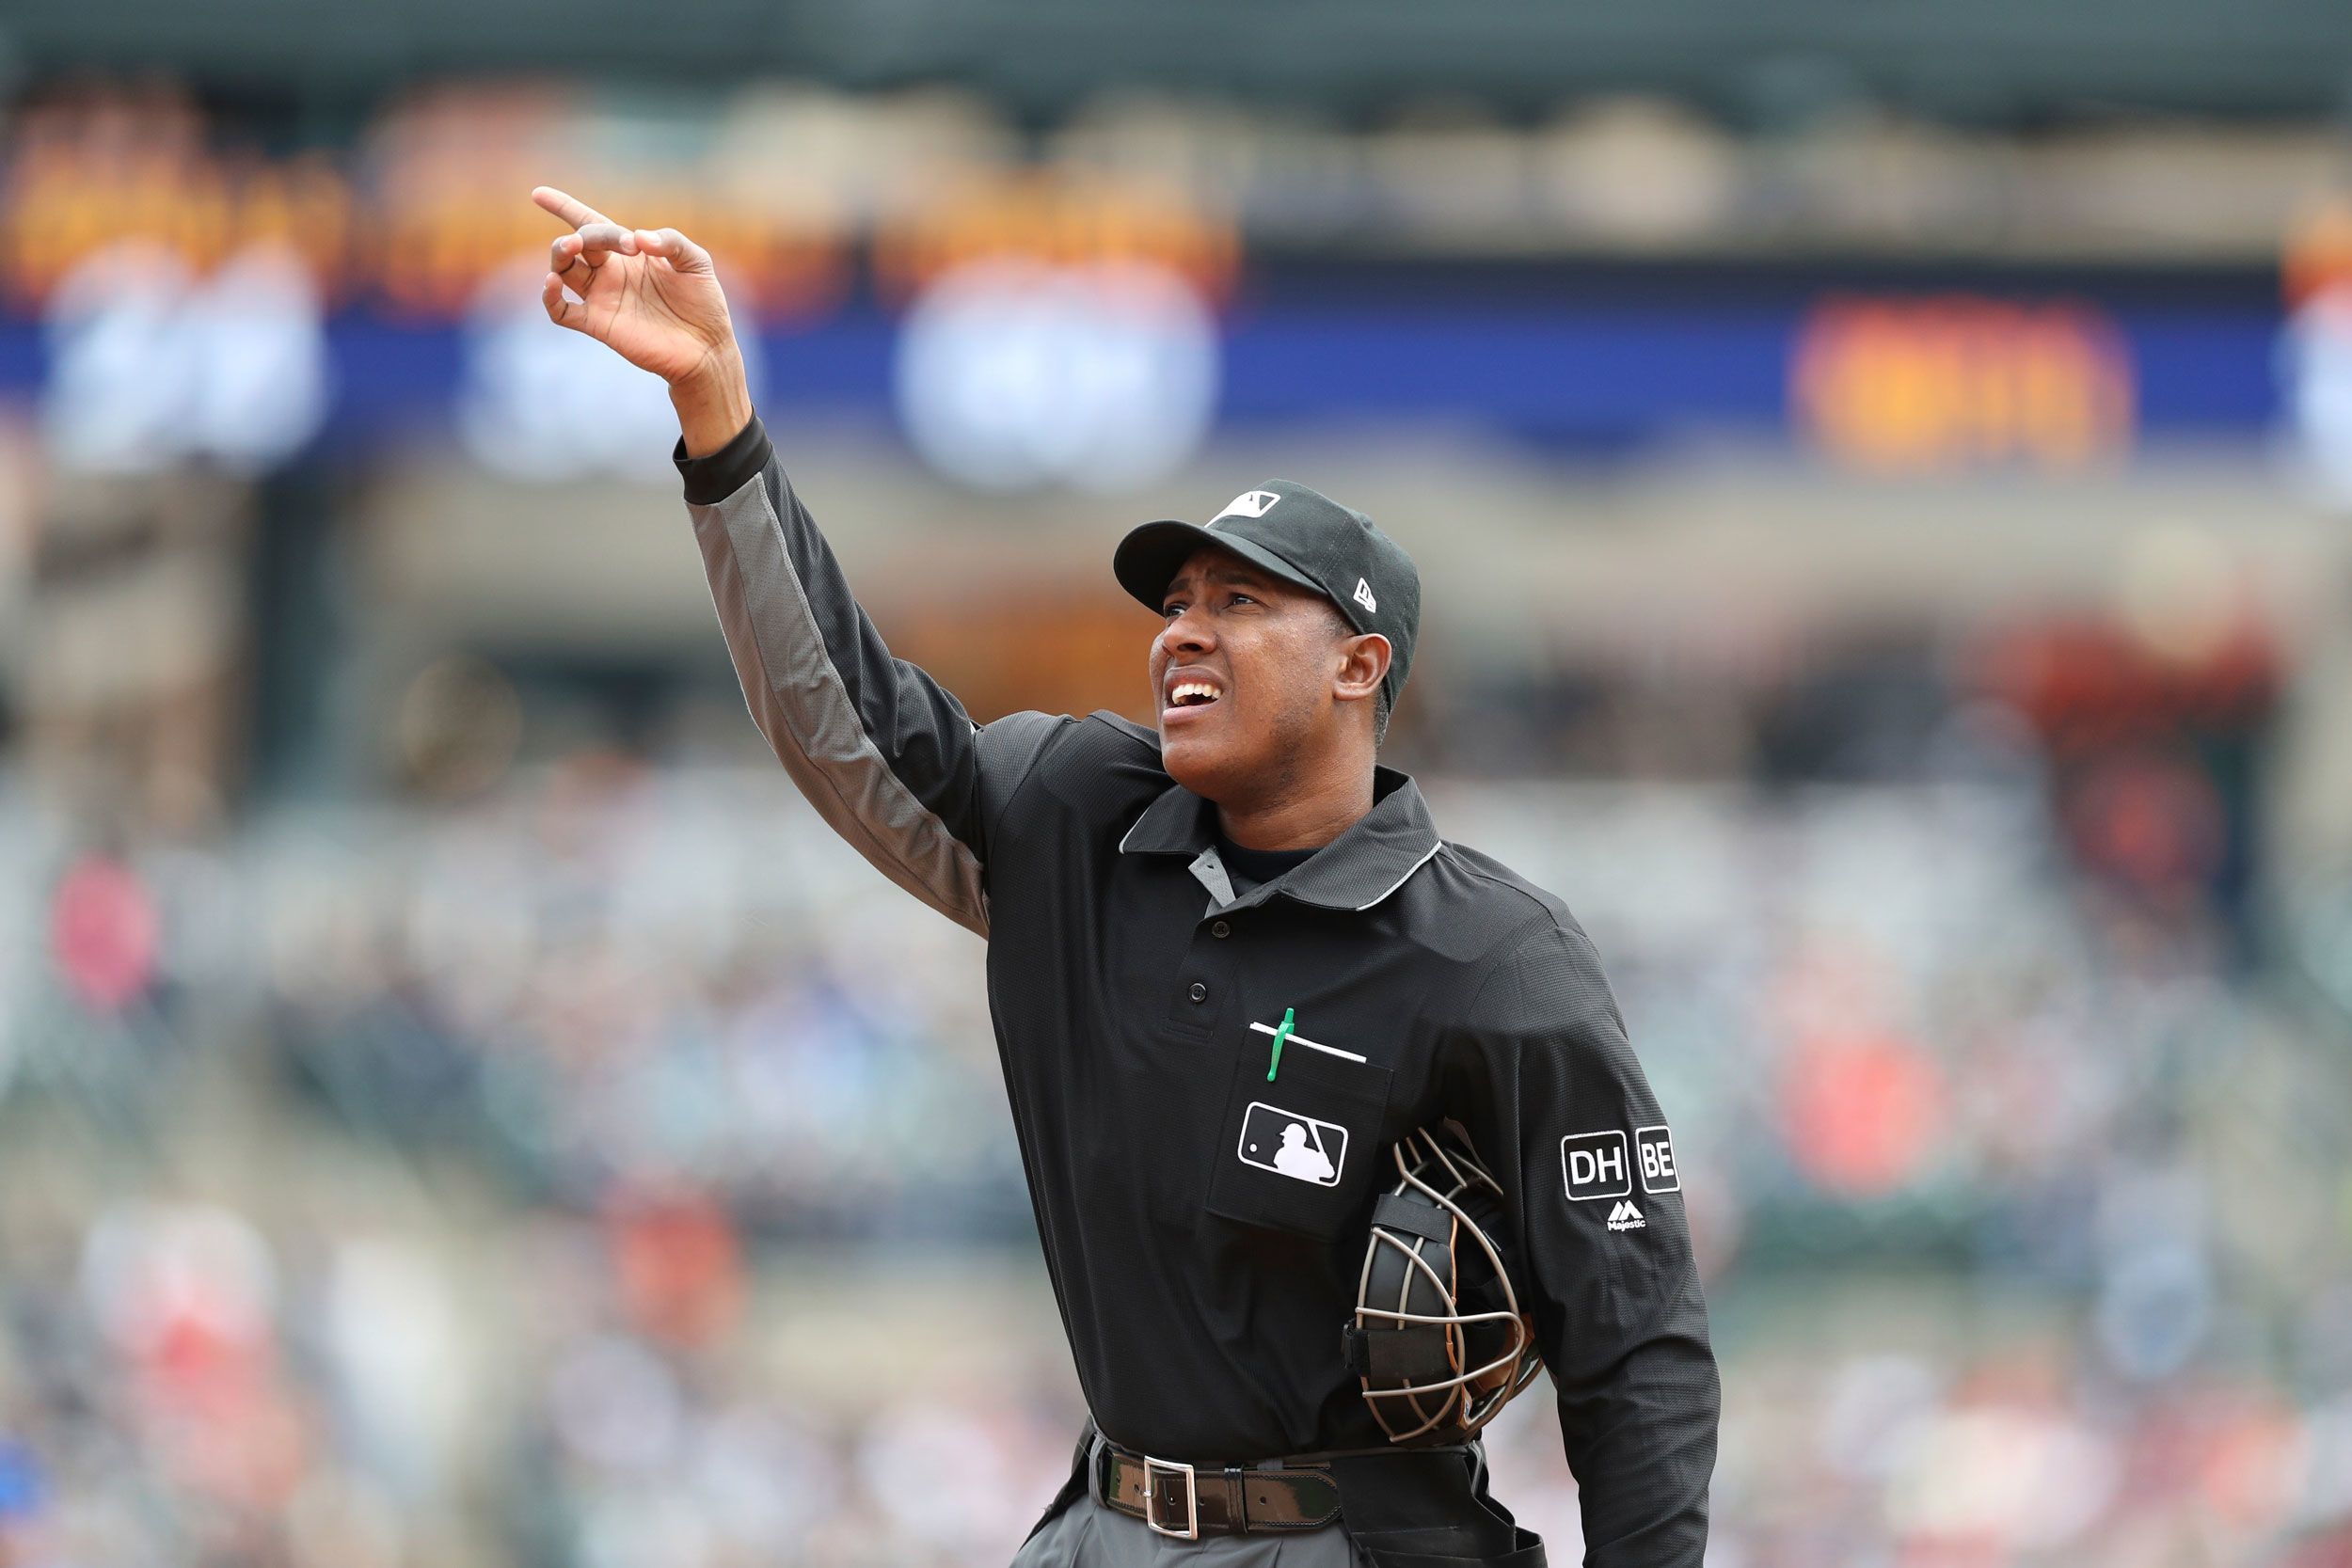 MLB advertising on umpire's uniforms has takena very dark turn - Free  For All - Umpire-Empire